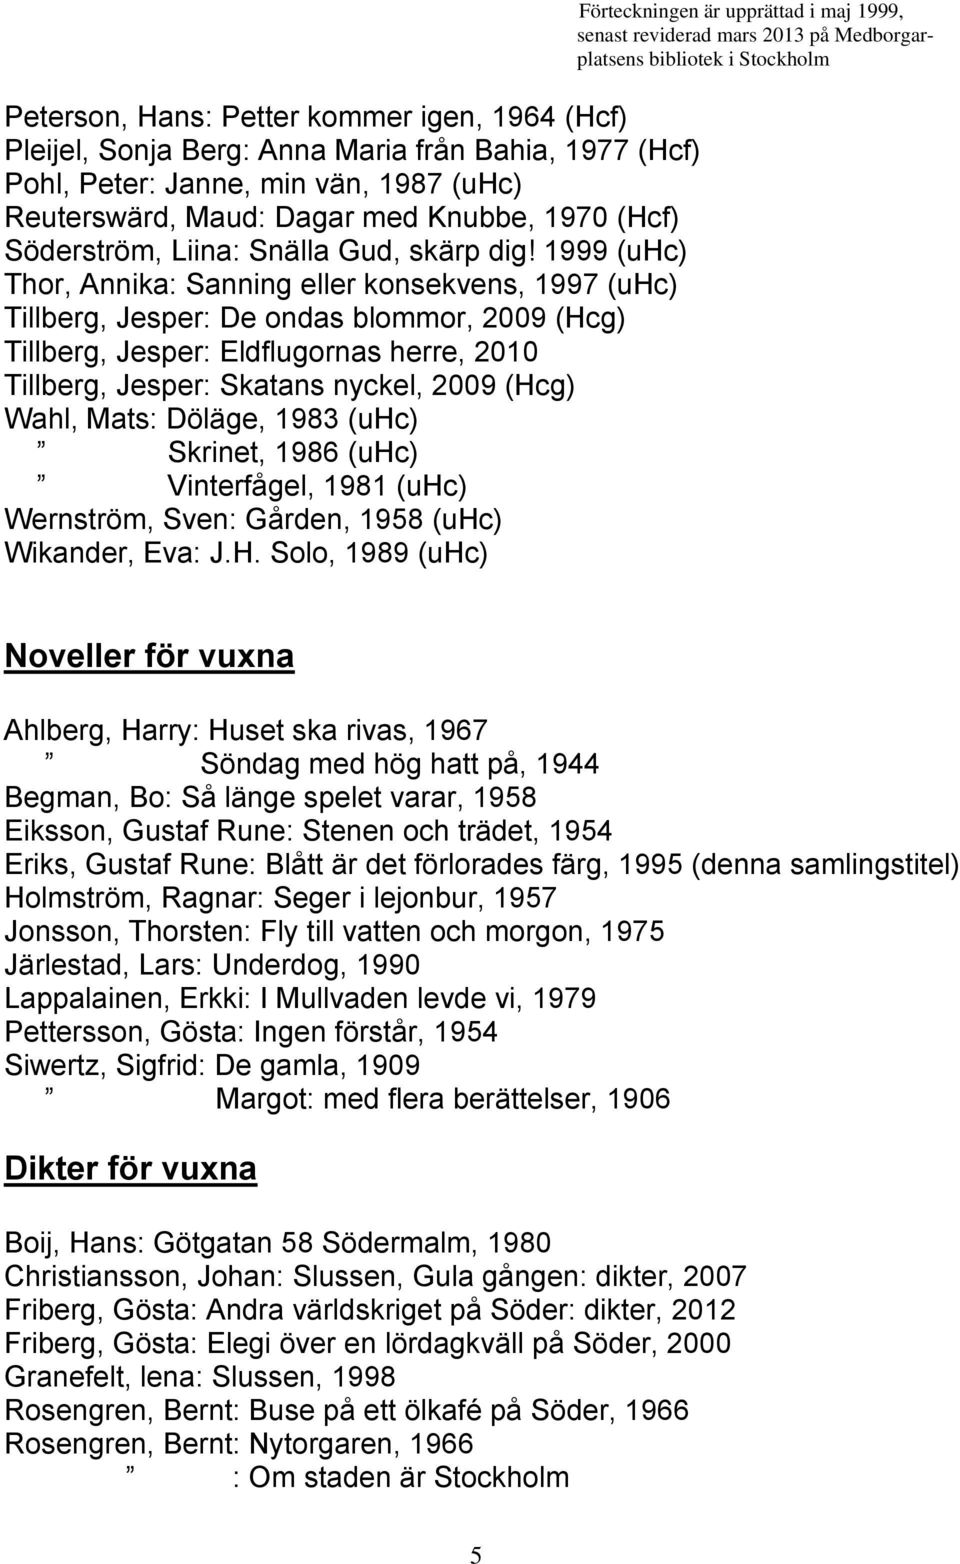 1999 (uhc) Thor, Annika: Sanning eller konsekvens, 1997 (uhc) Tillberg, Jesper: De ondas blommor, 2009 (Hcg) Tillberg, Jesper: Eldflugornas herre, 2010 Tillberg, Jesper: Skatans nyckel, 2009 (Hcg)